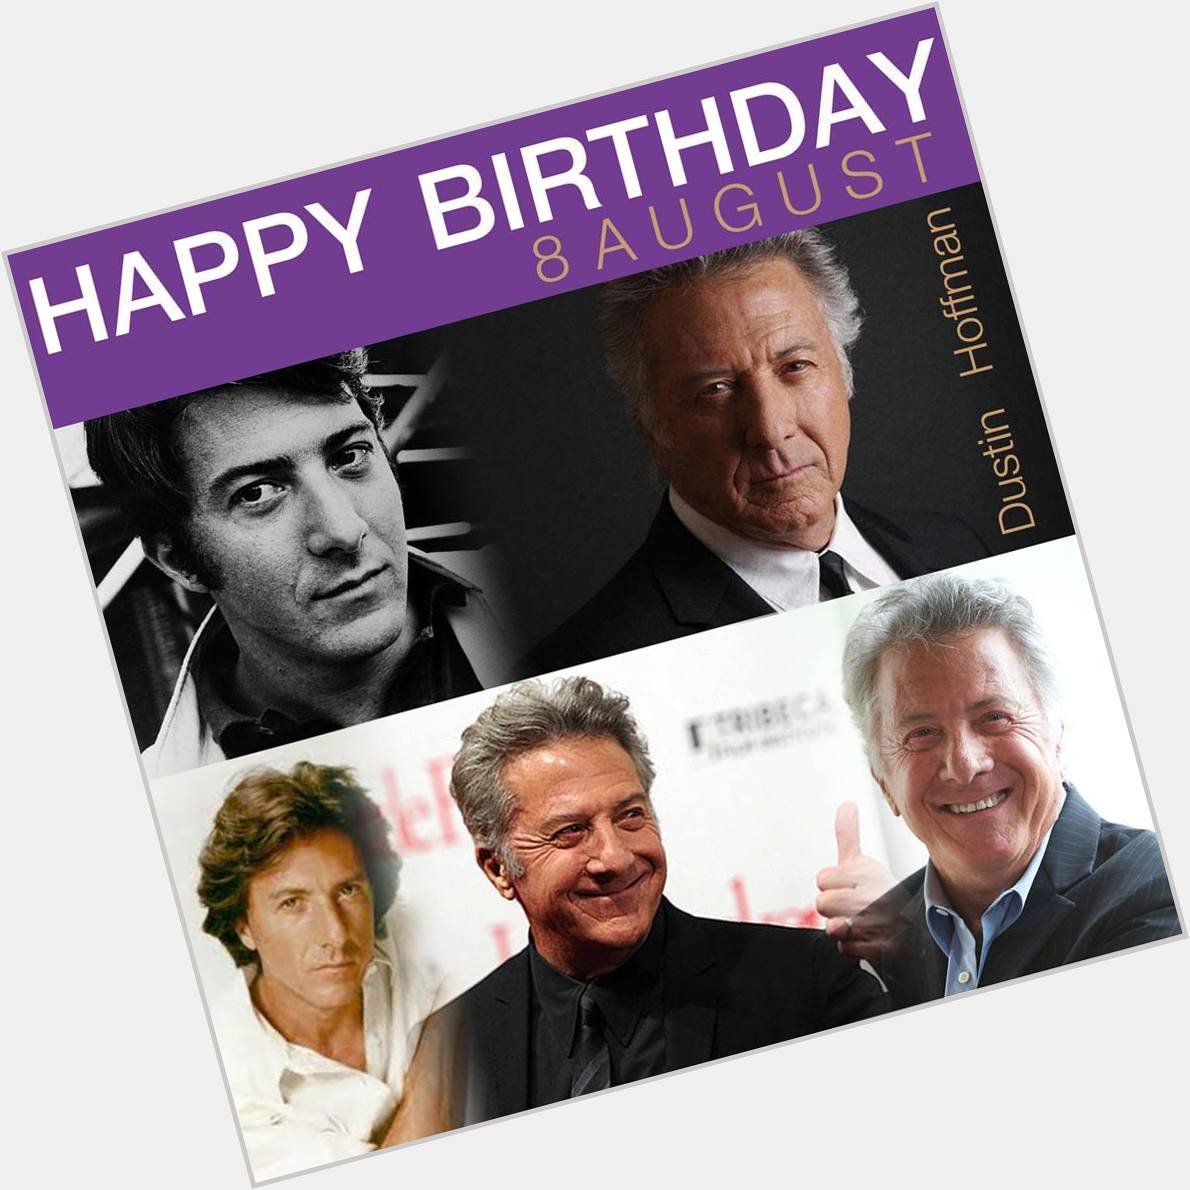 8 August Happy Birthday
Dustin Hoffman 